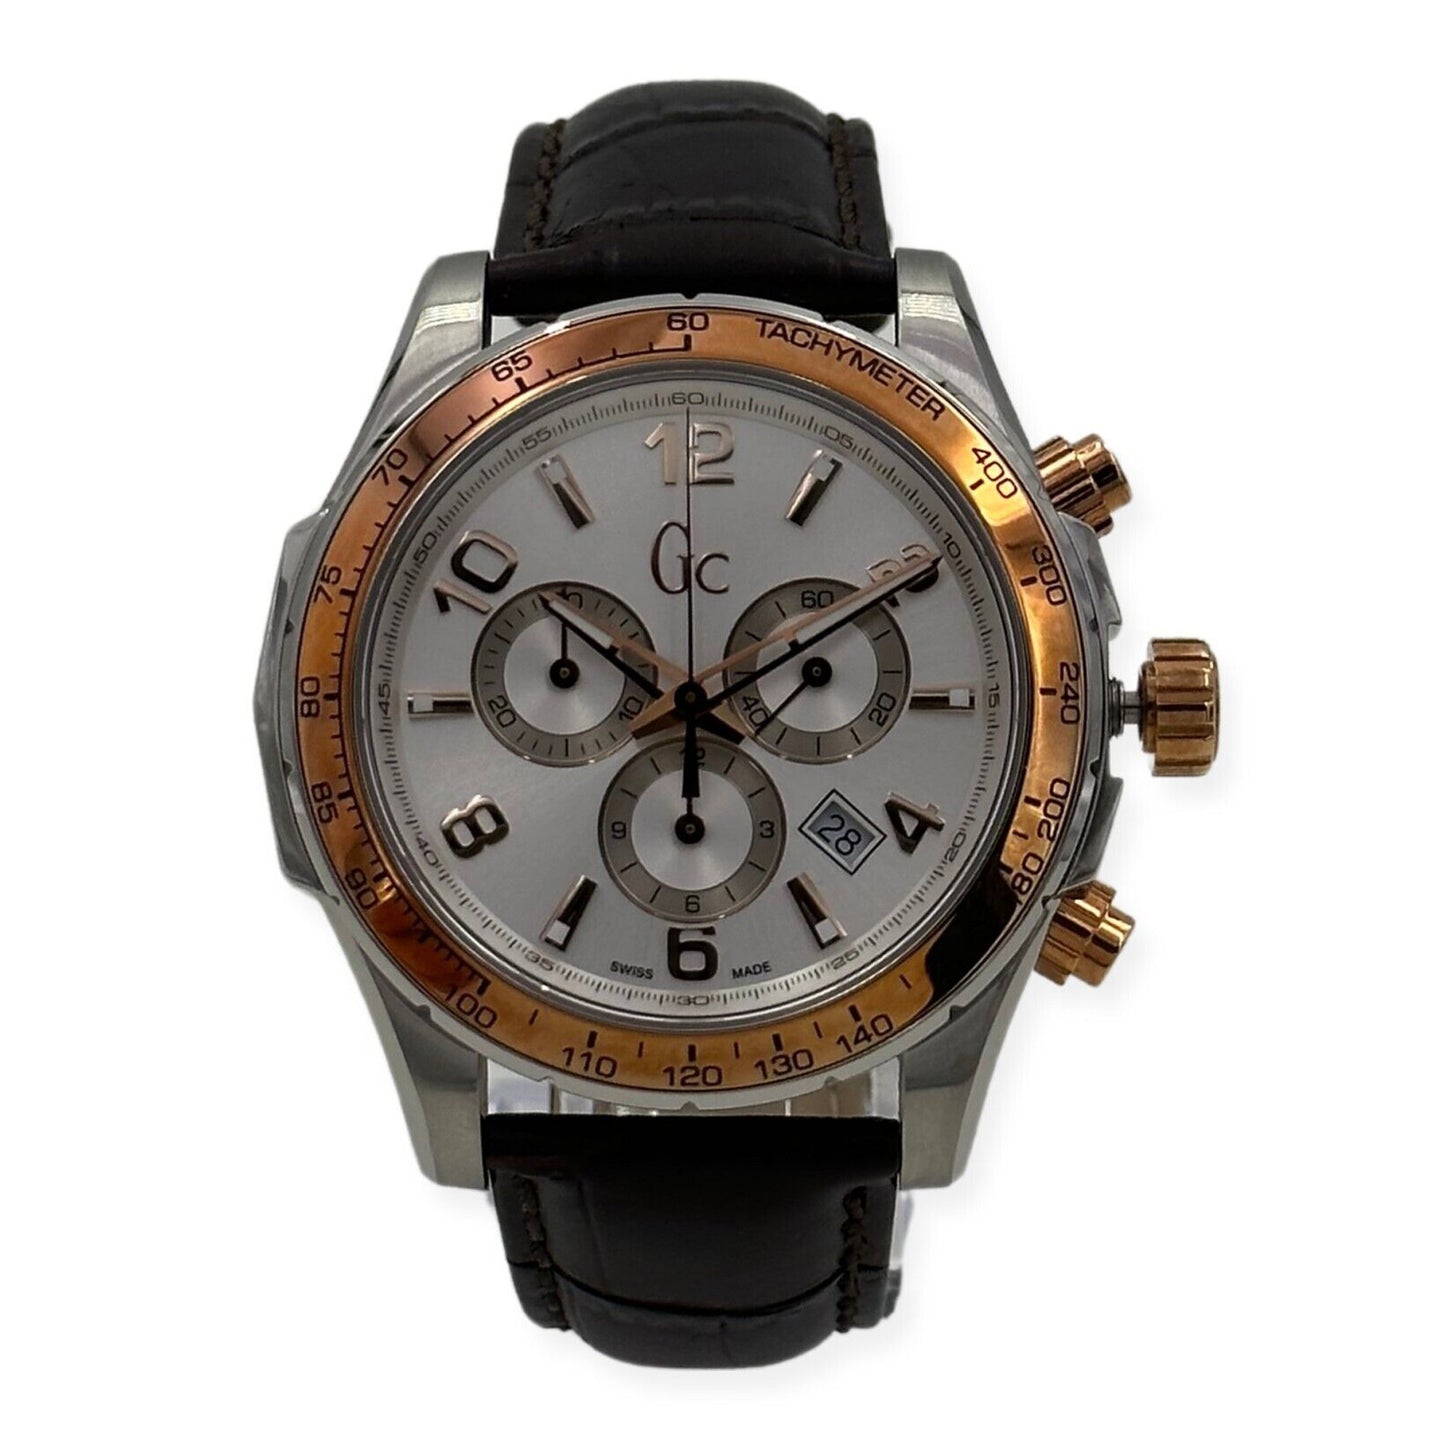 GUESS Technosport Silver Men's Chronograph Watch - X51005G1S - 91661444357